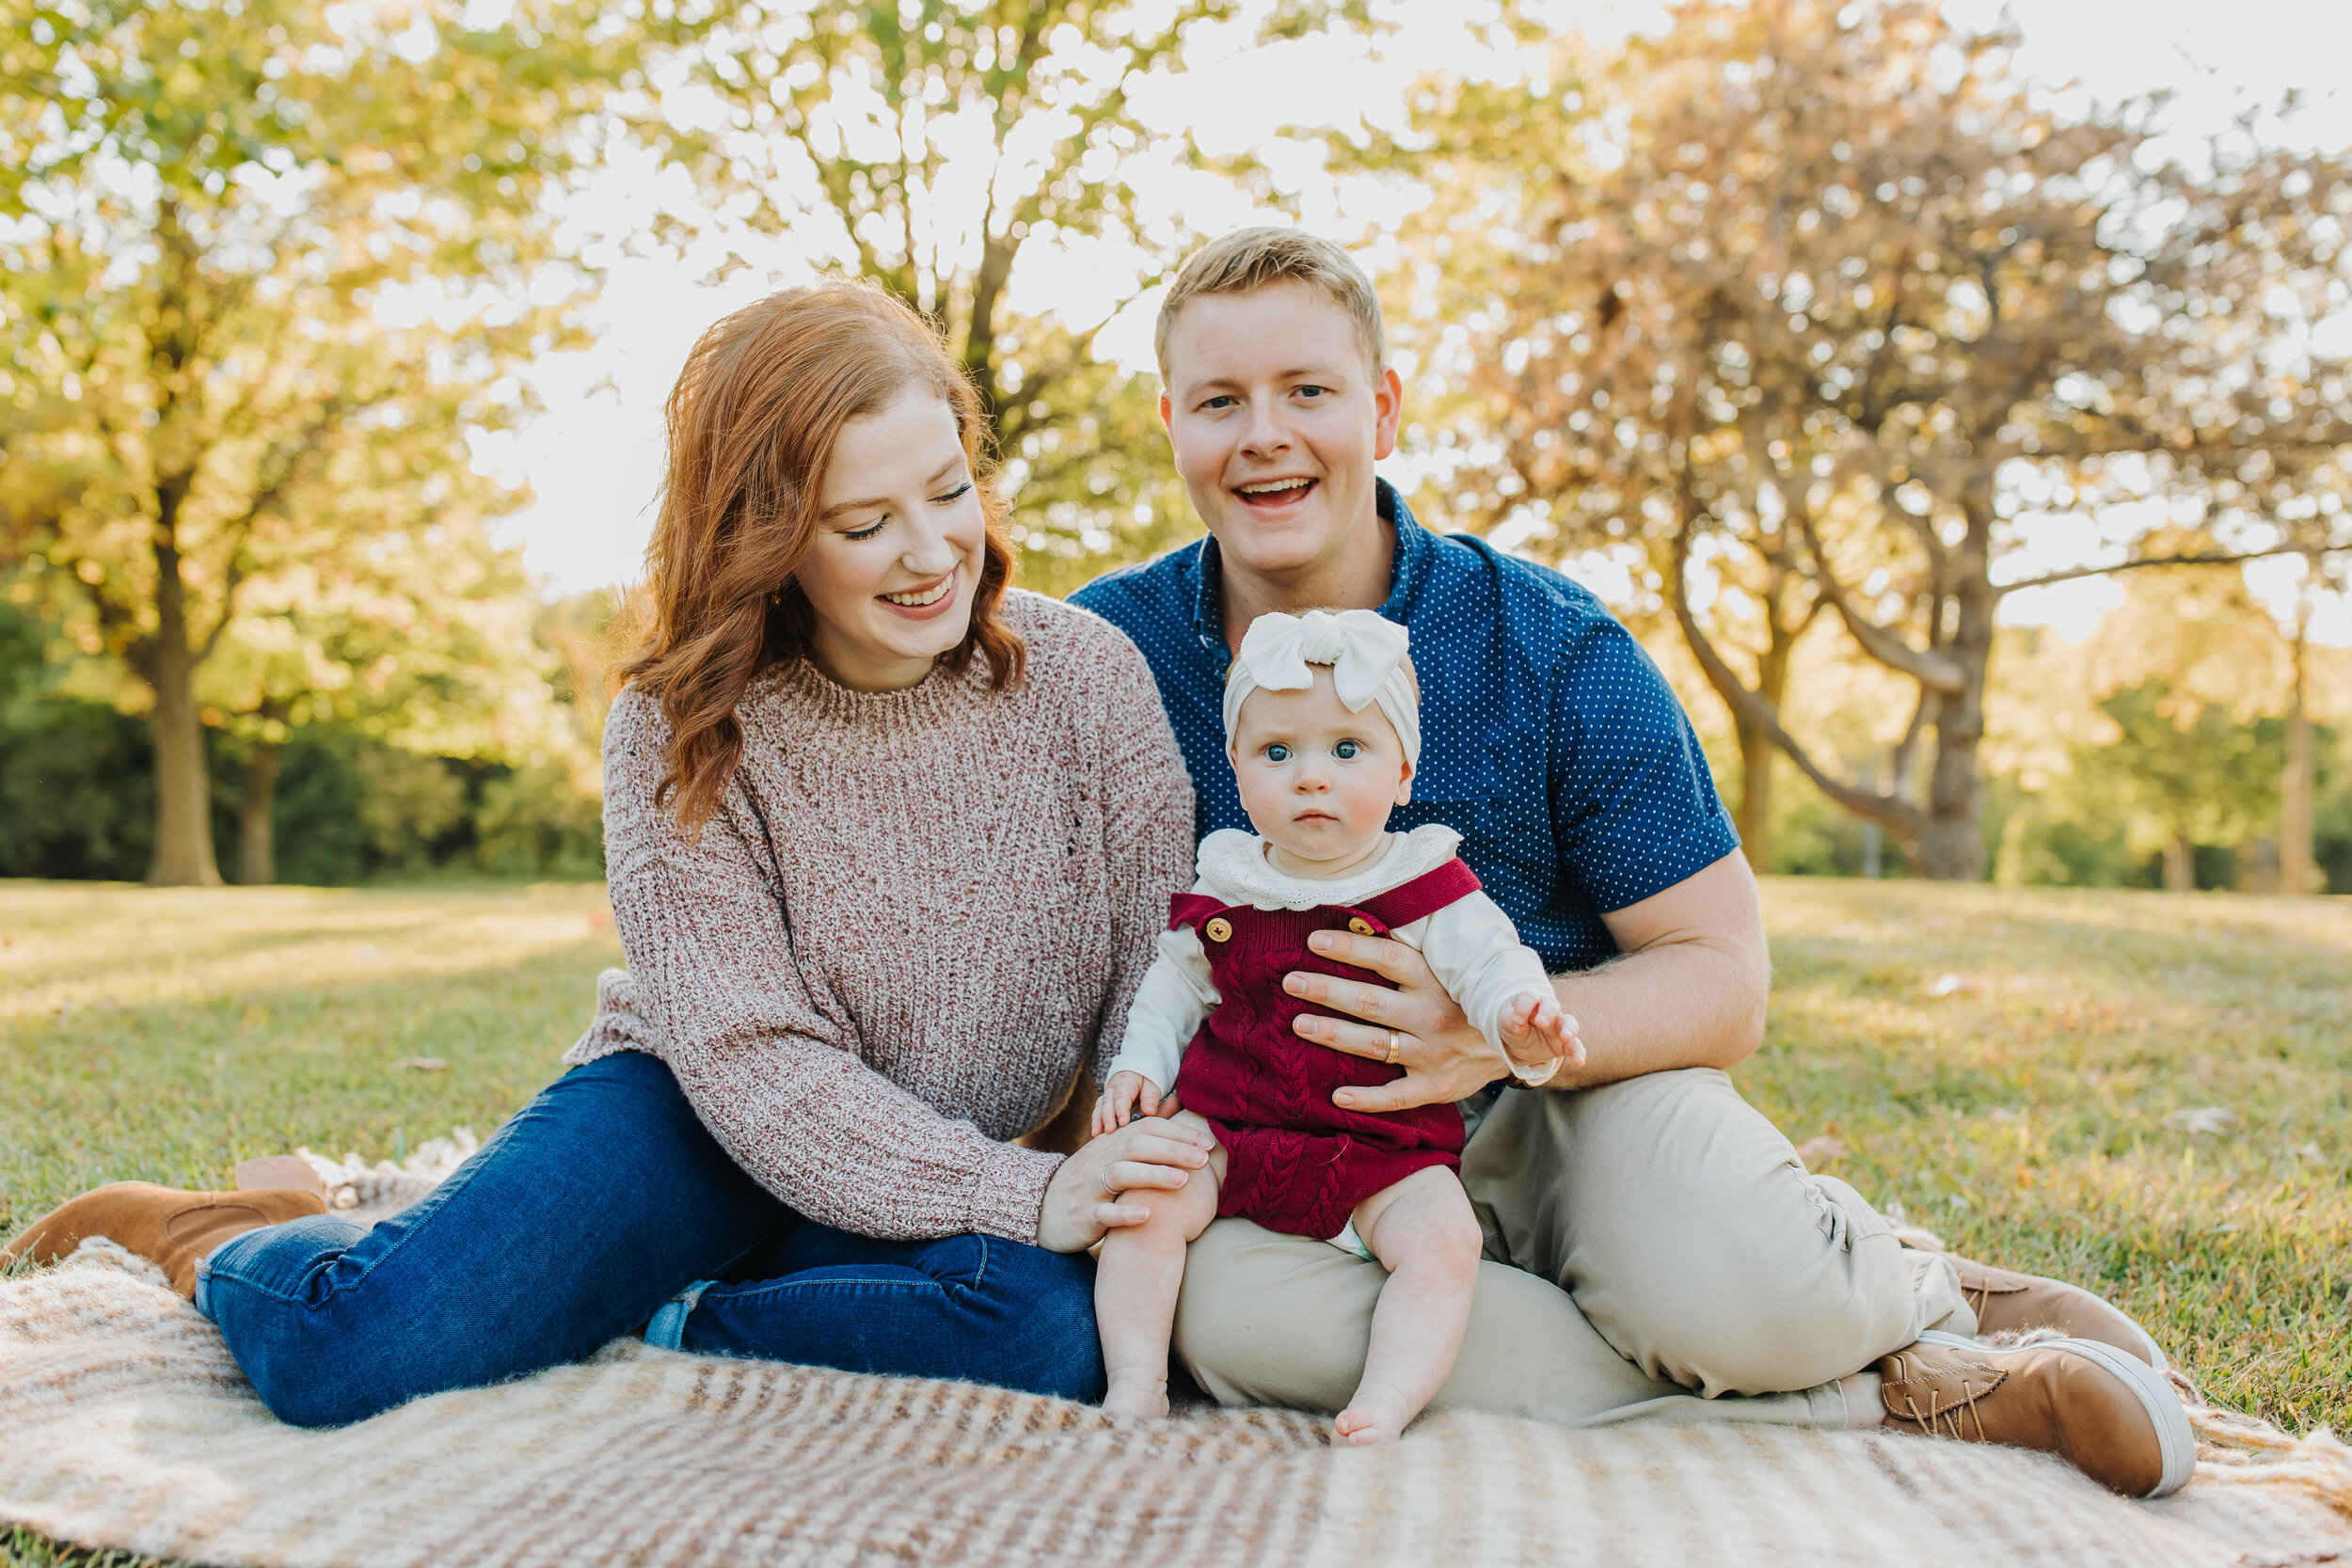 Unger Family Photos 2020 - Nathaniel Jensen Photography - Omaha Nebraska Family Photographer-64.jpg